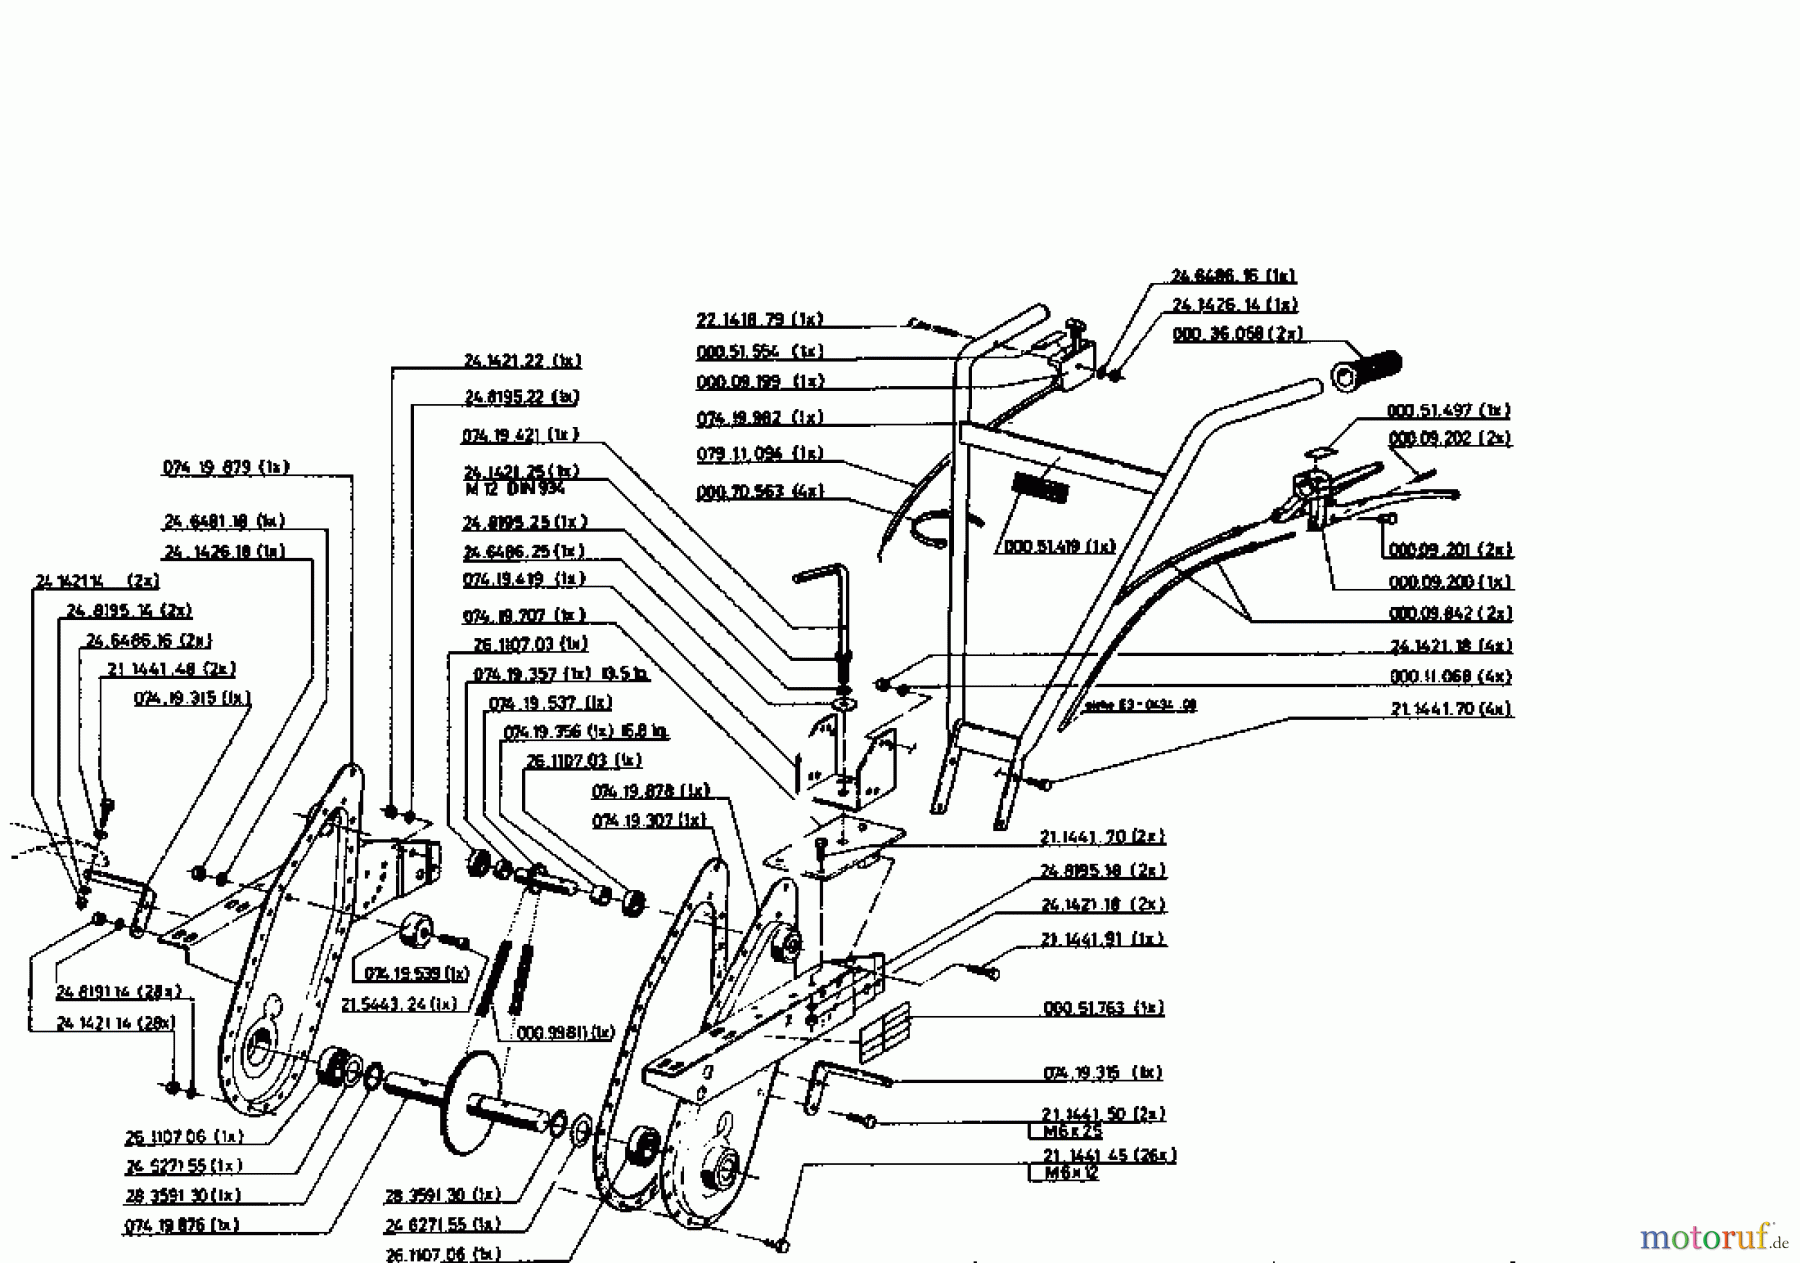  Gutbrod Motobineuse MB 62-52 07518.02  (1995) Machine de base